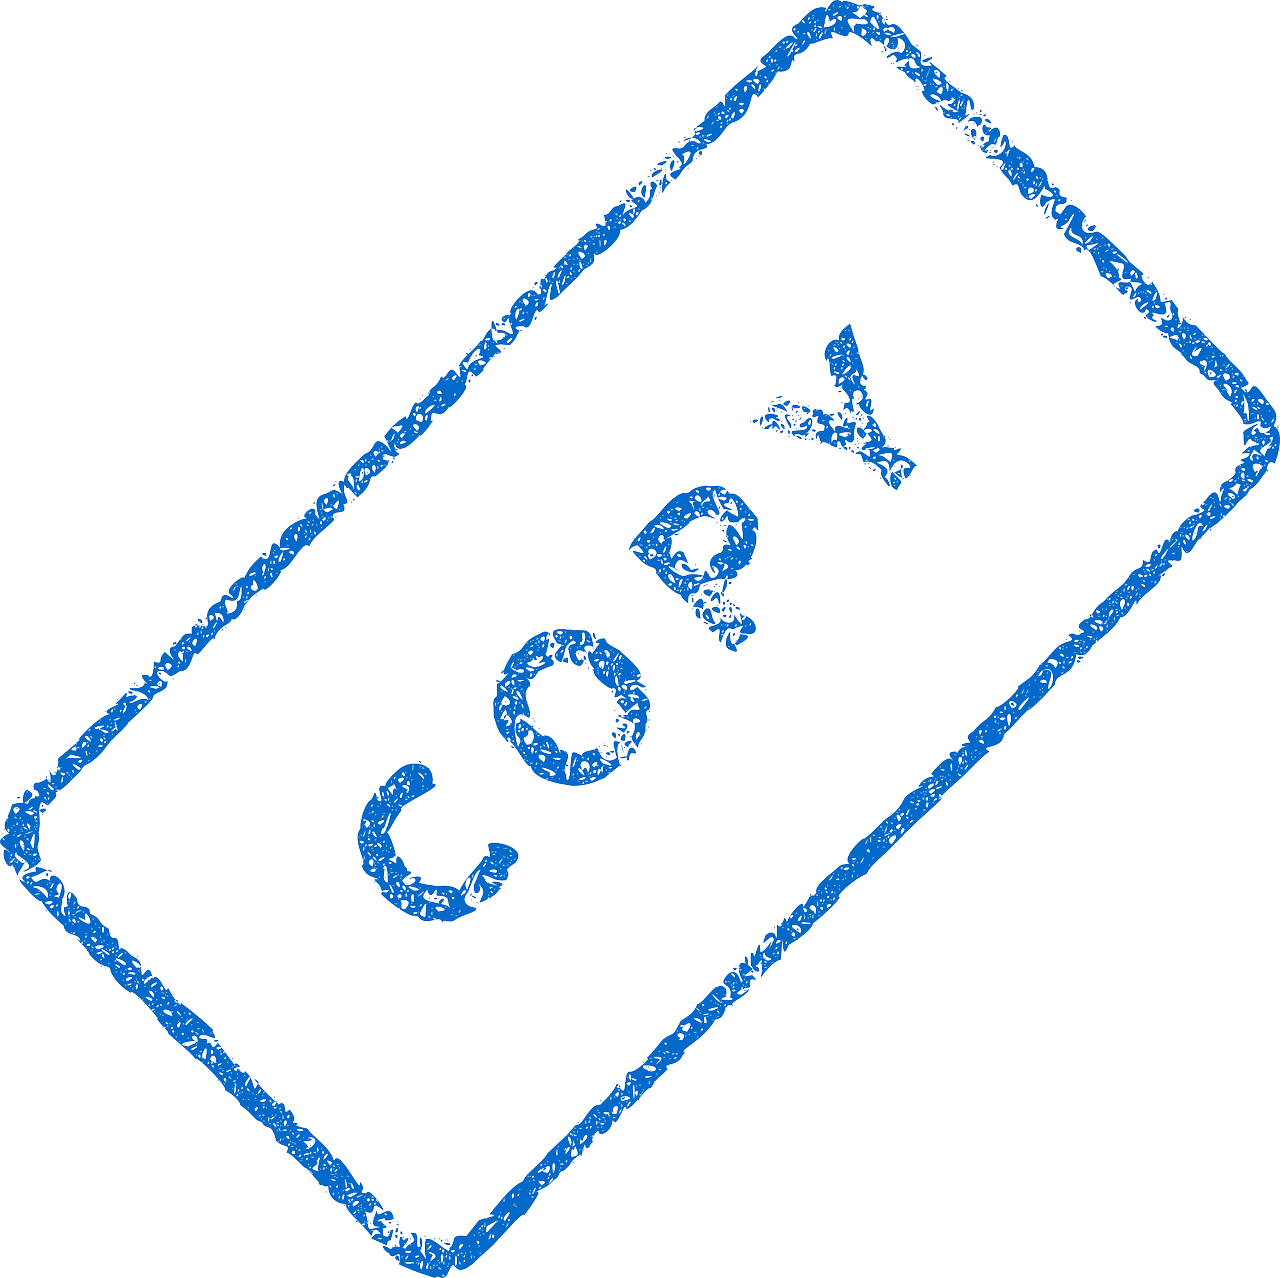 copy business document free photo